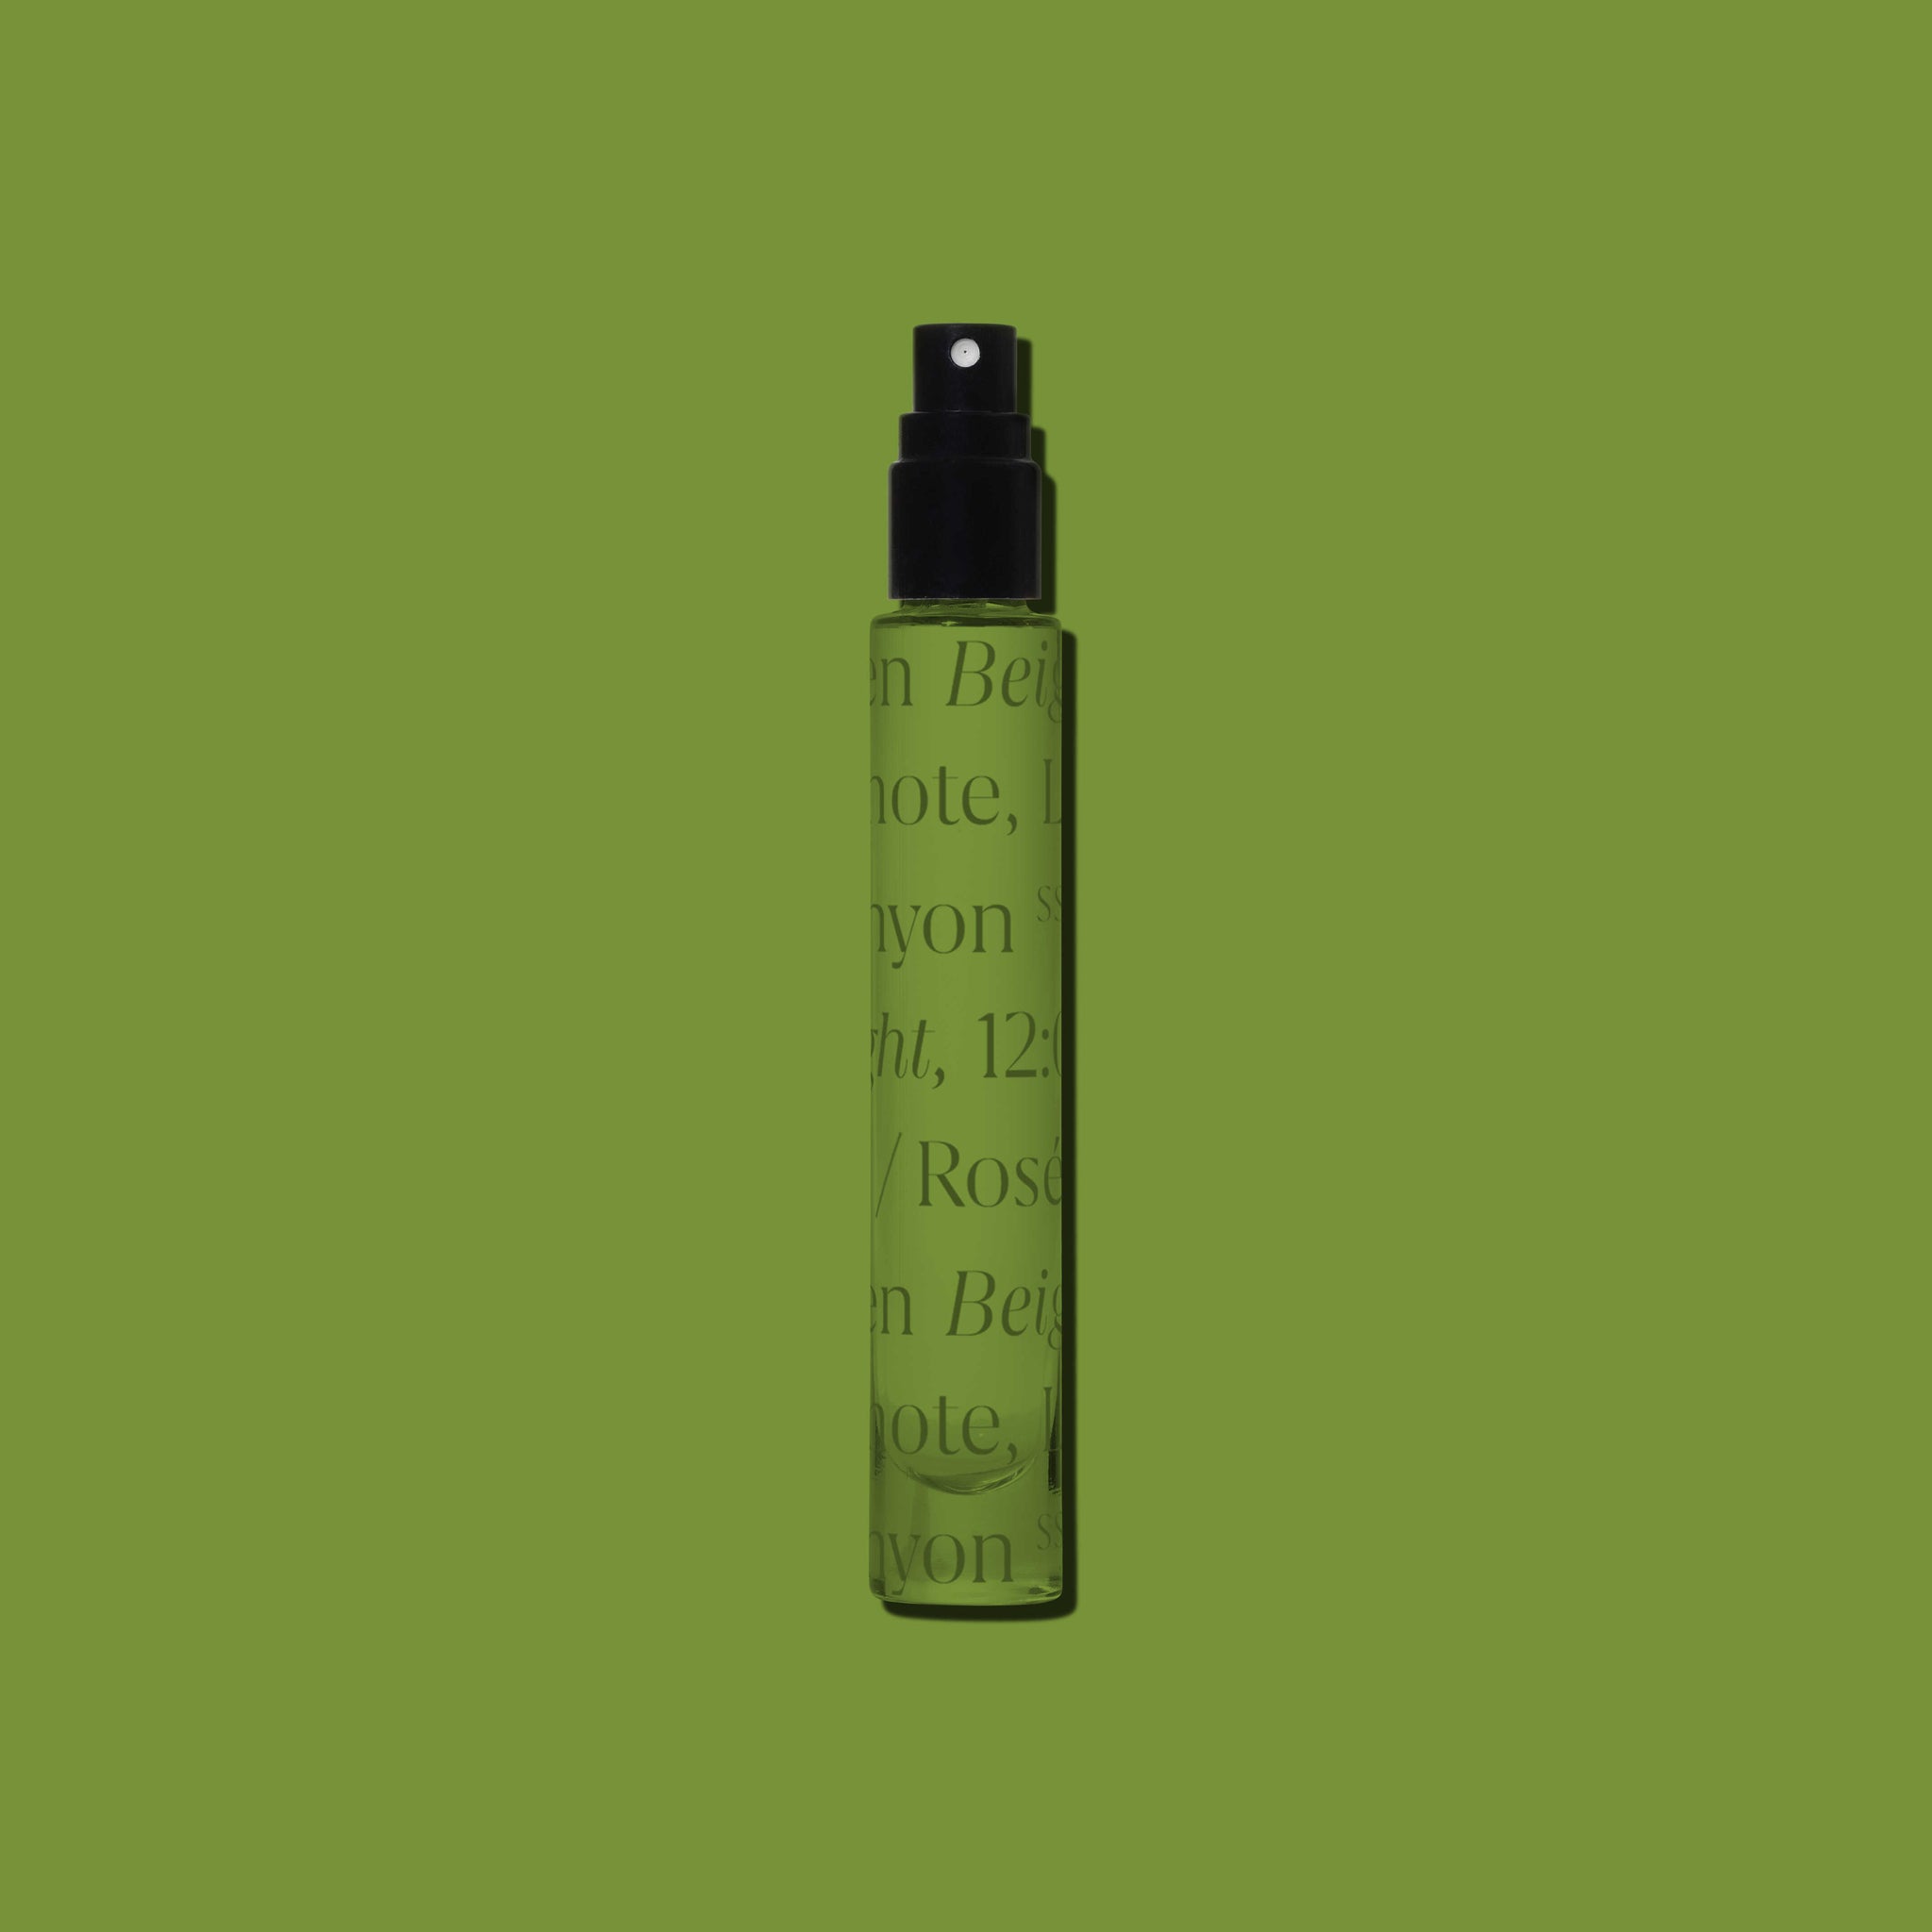 Perfume Spray Bottle Mockup - Copal Studio Packaging Mockups For Designers